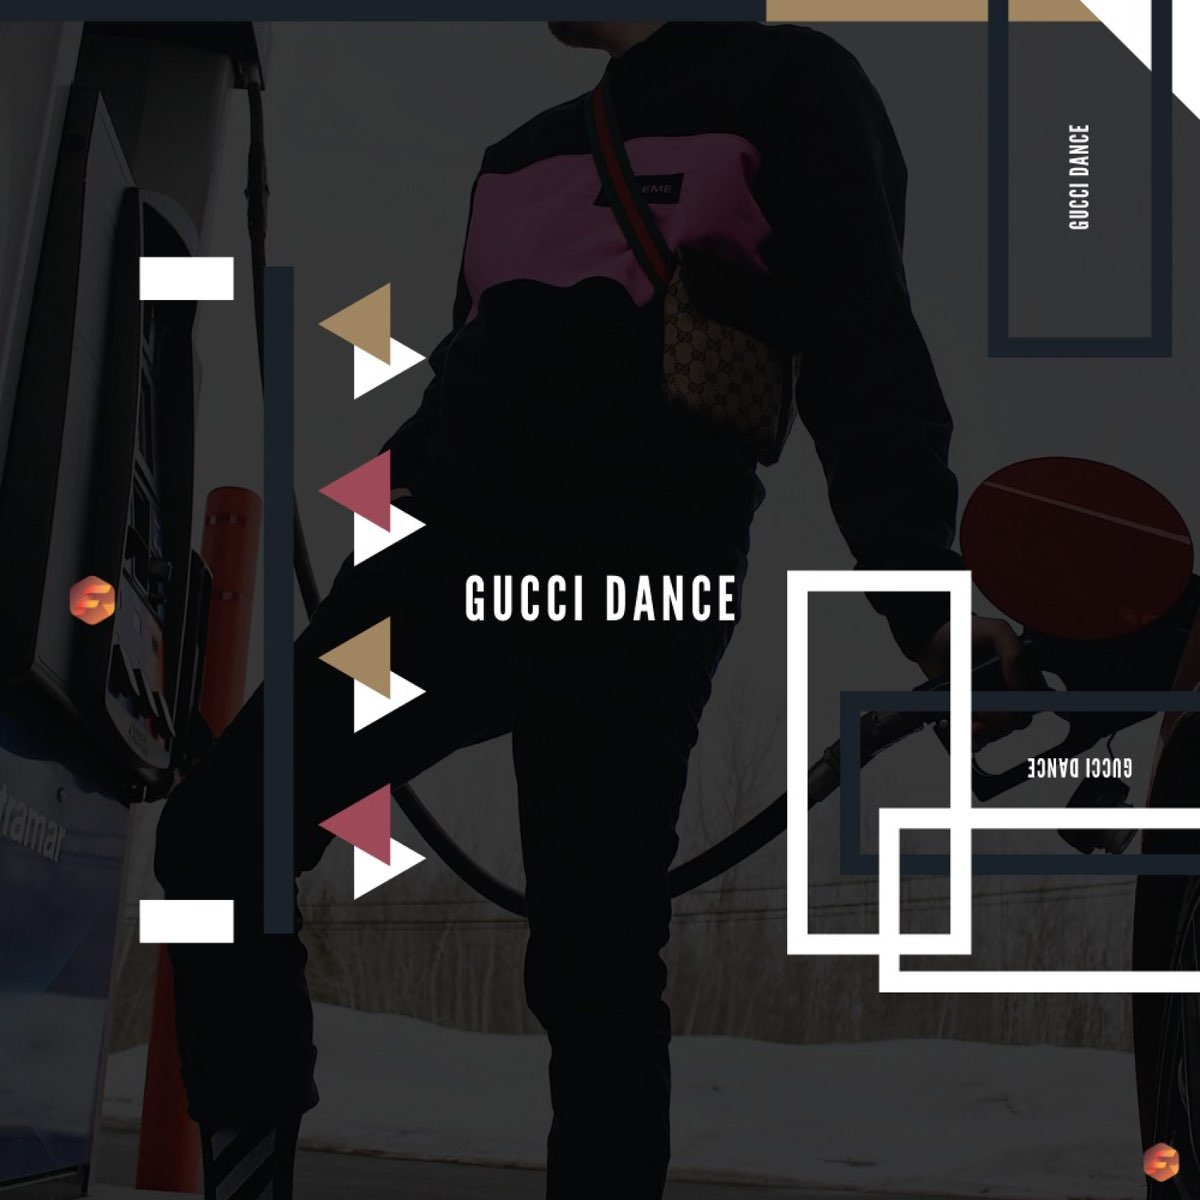 ‎Gucci Dance - Single - Album by Frenk - Apple Music